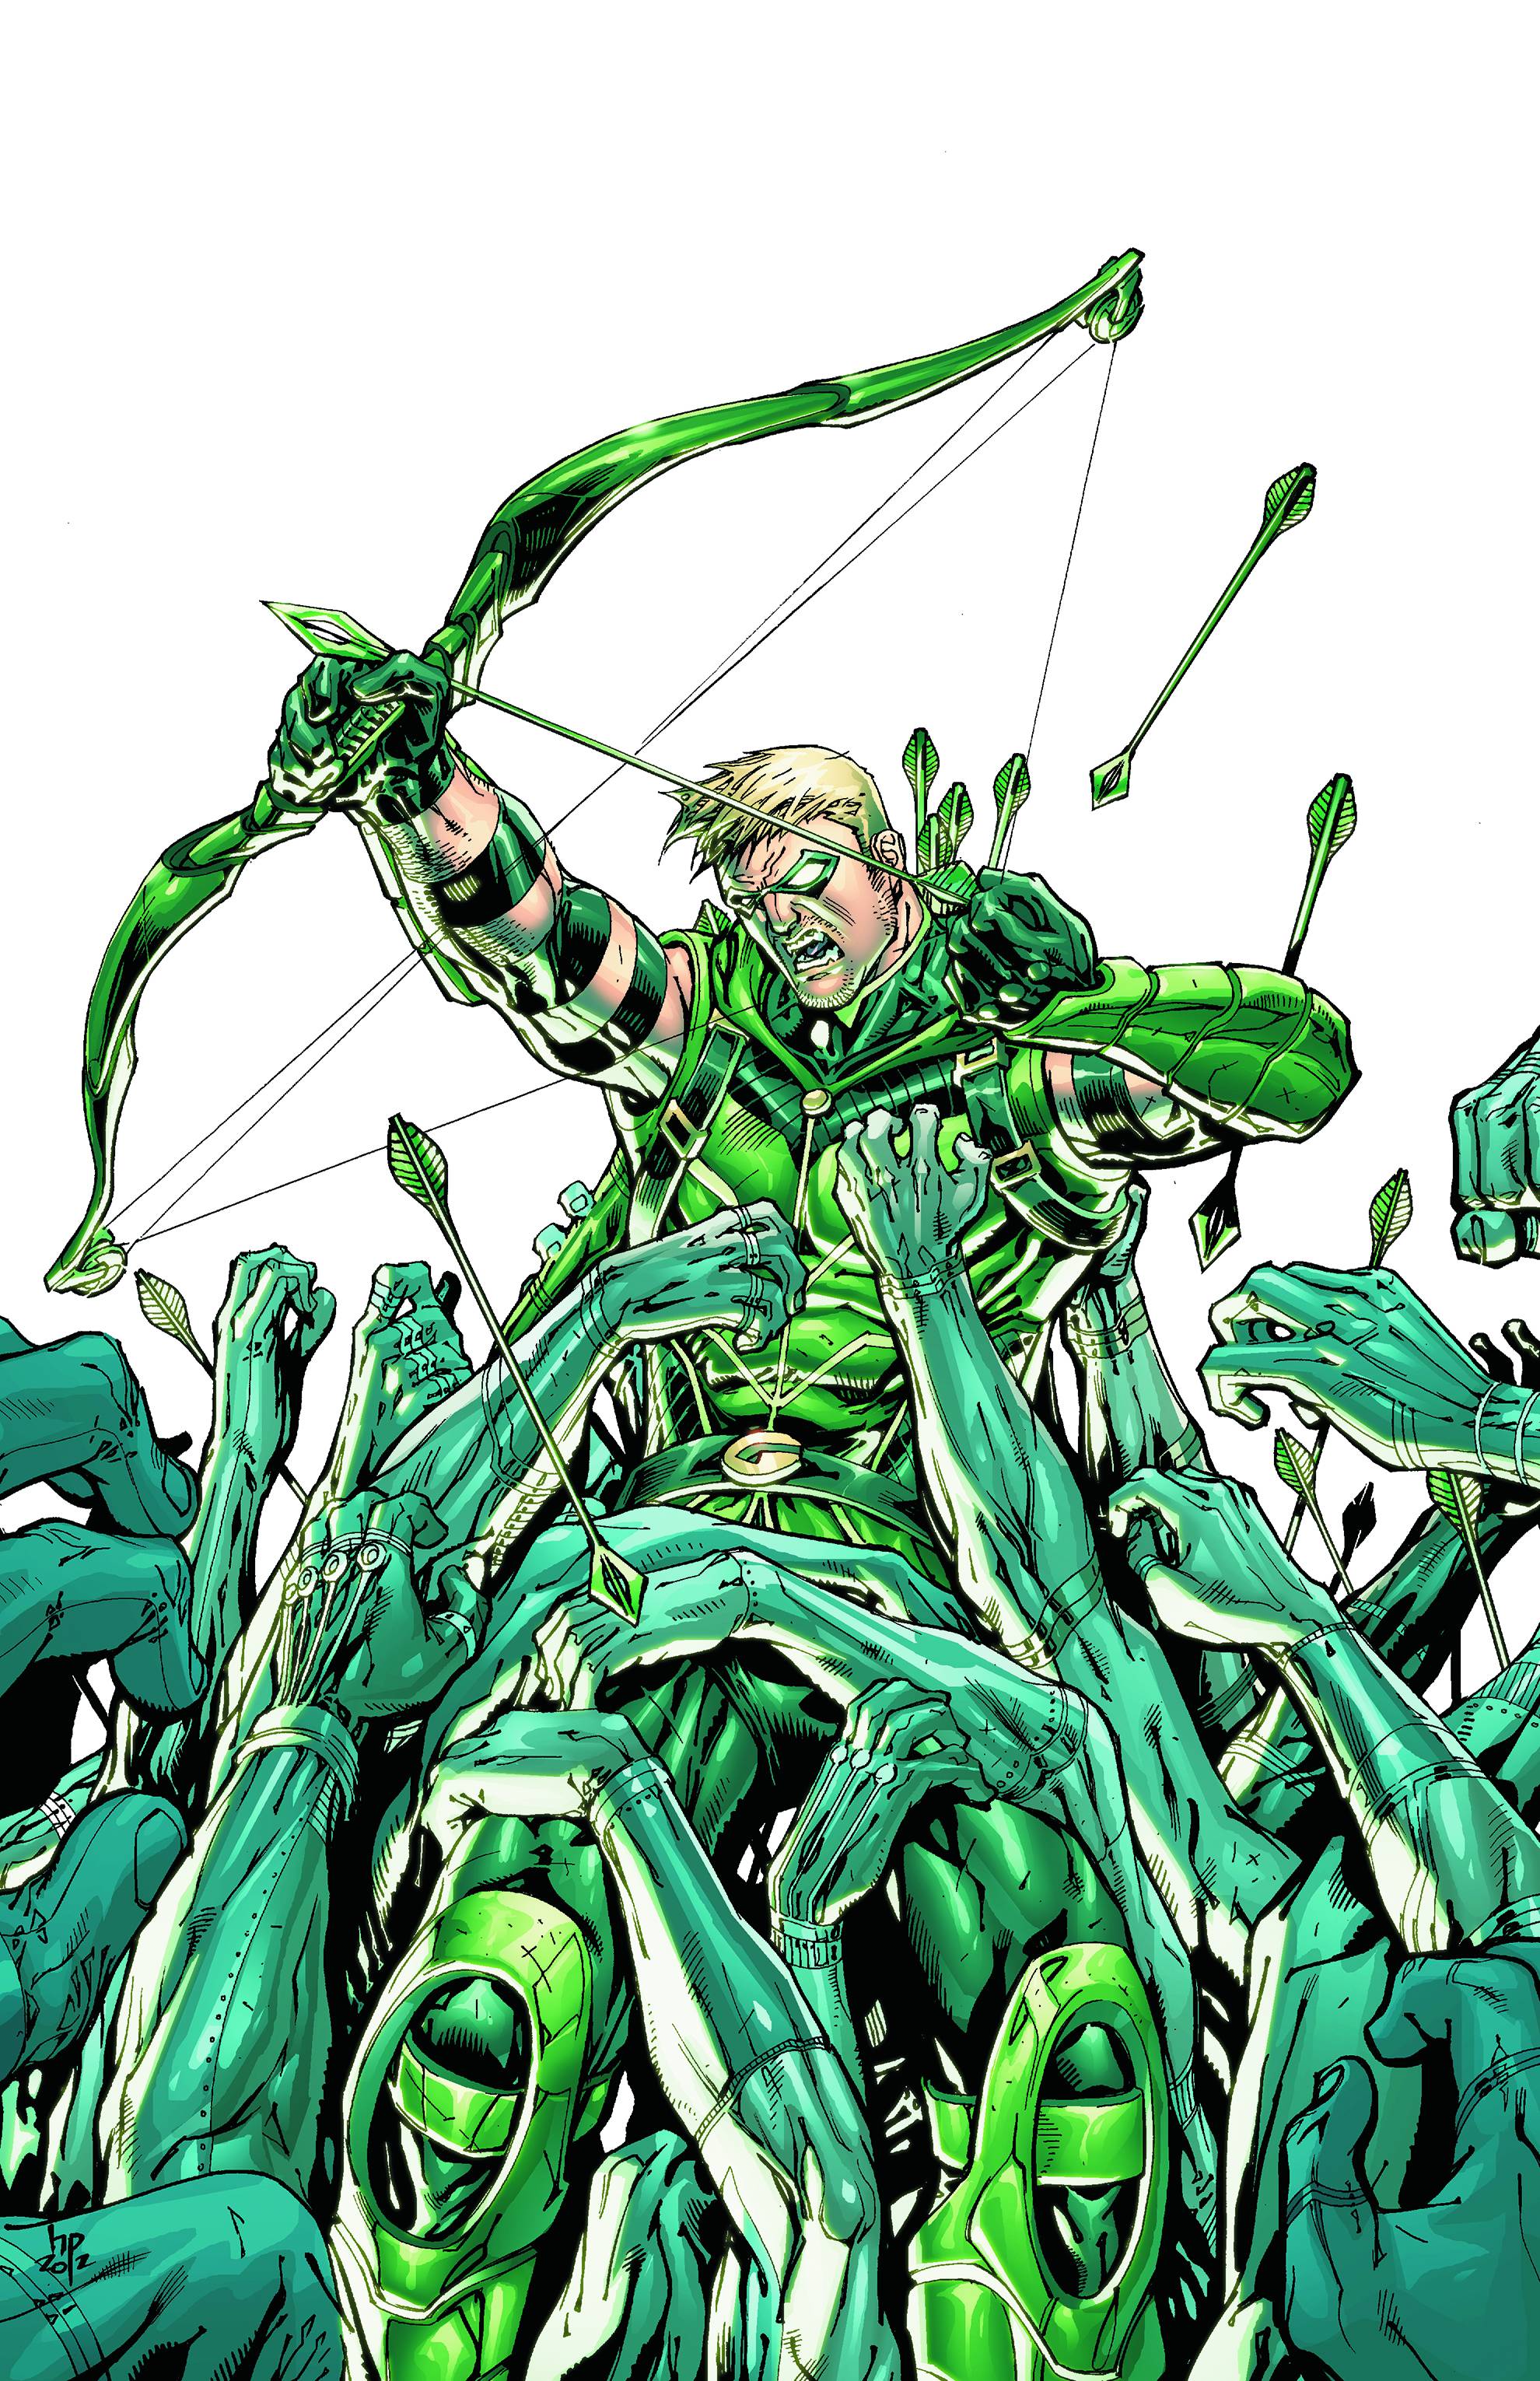 Green Arrow #10 (2011)